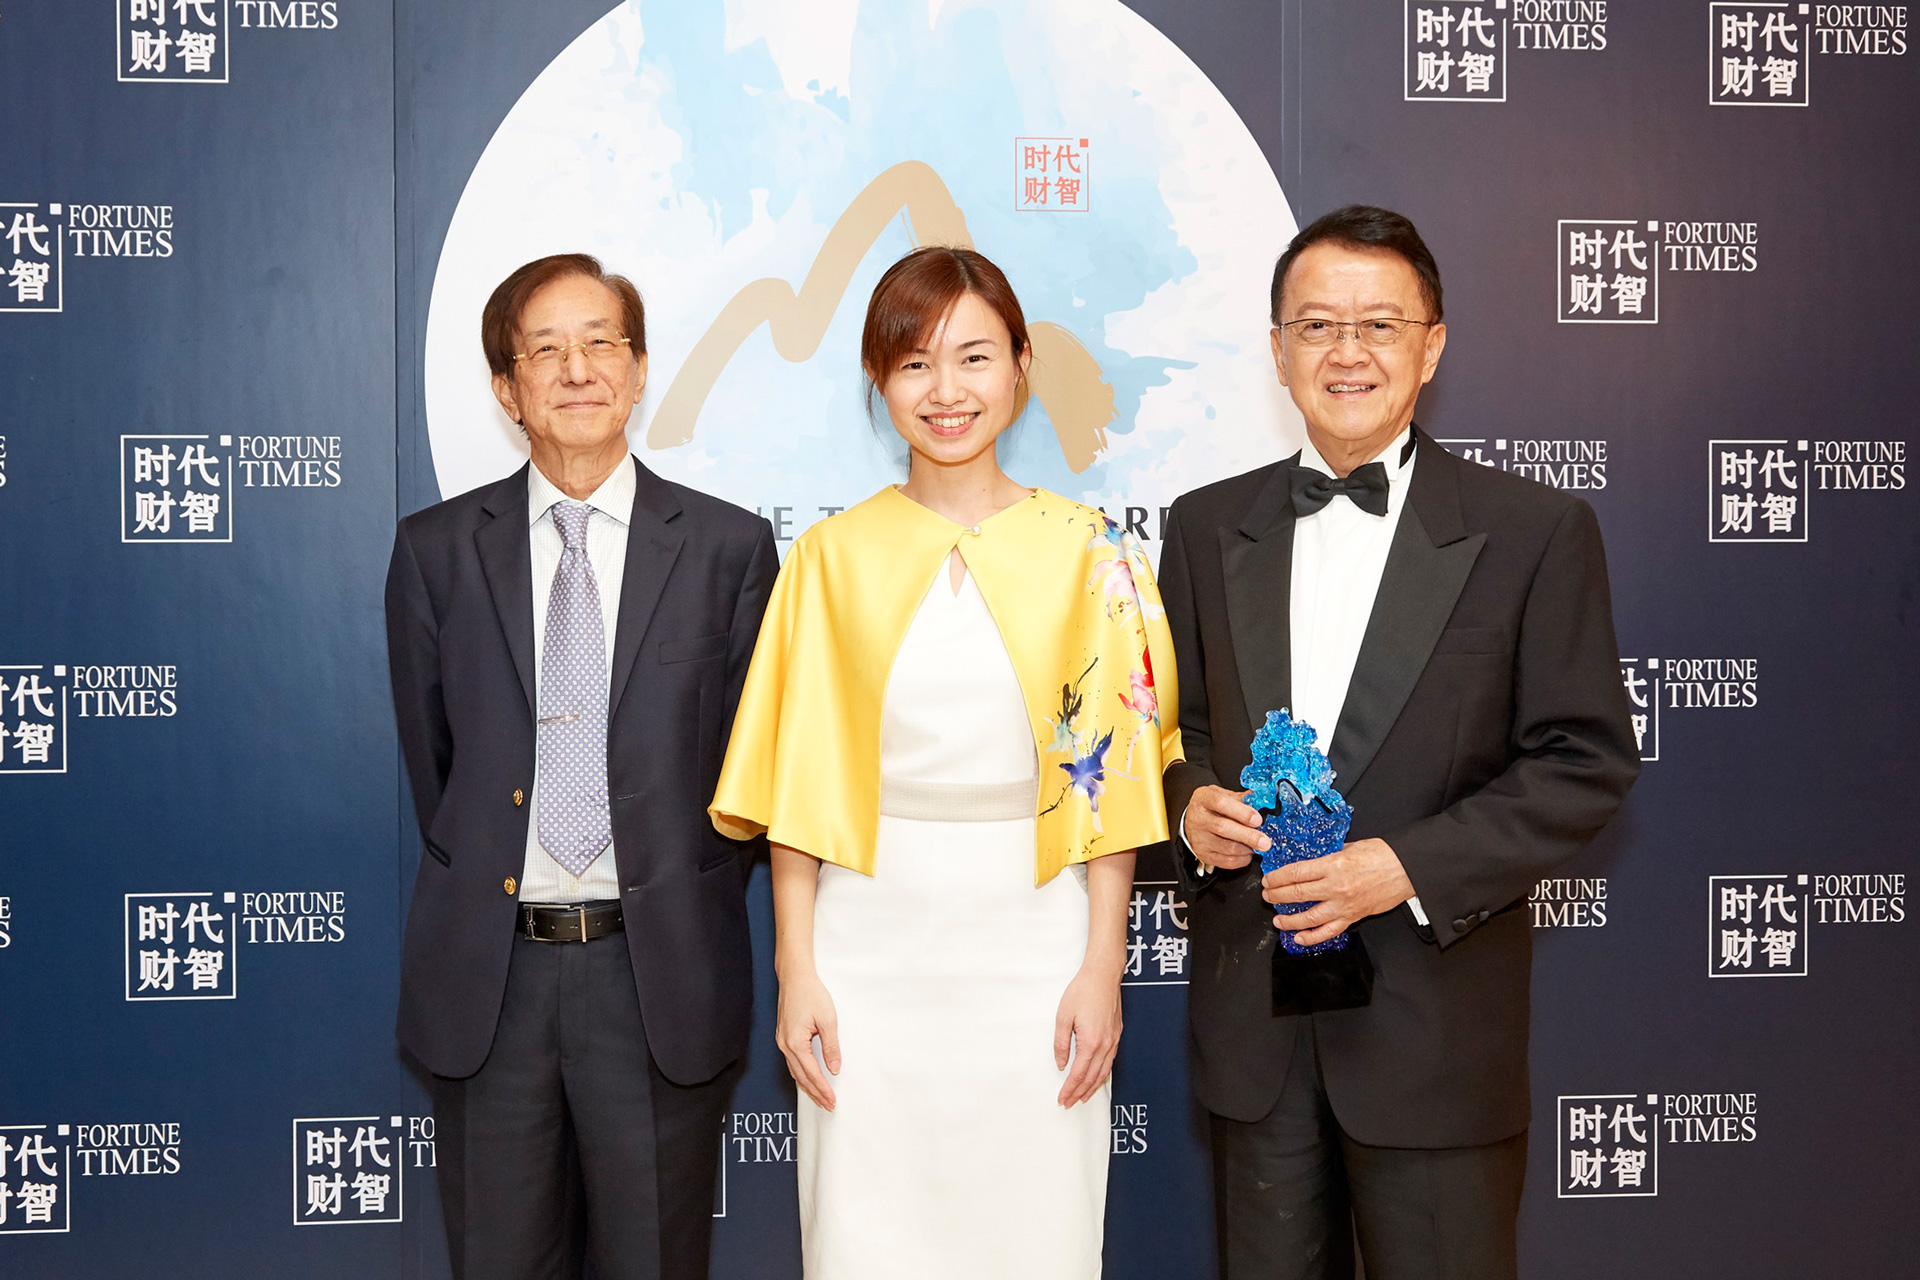 Tan Sri Dr Jeffrey Cheah Receives Asia’s Lifetime Achievement Award in Singapore